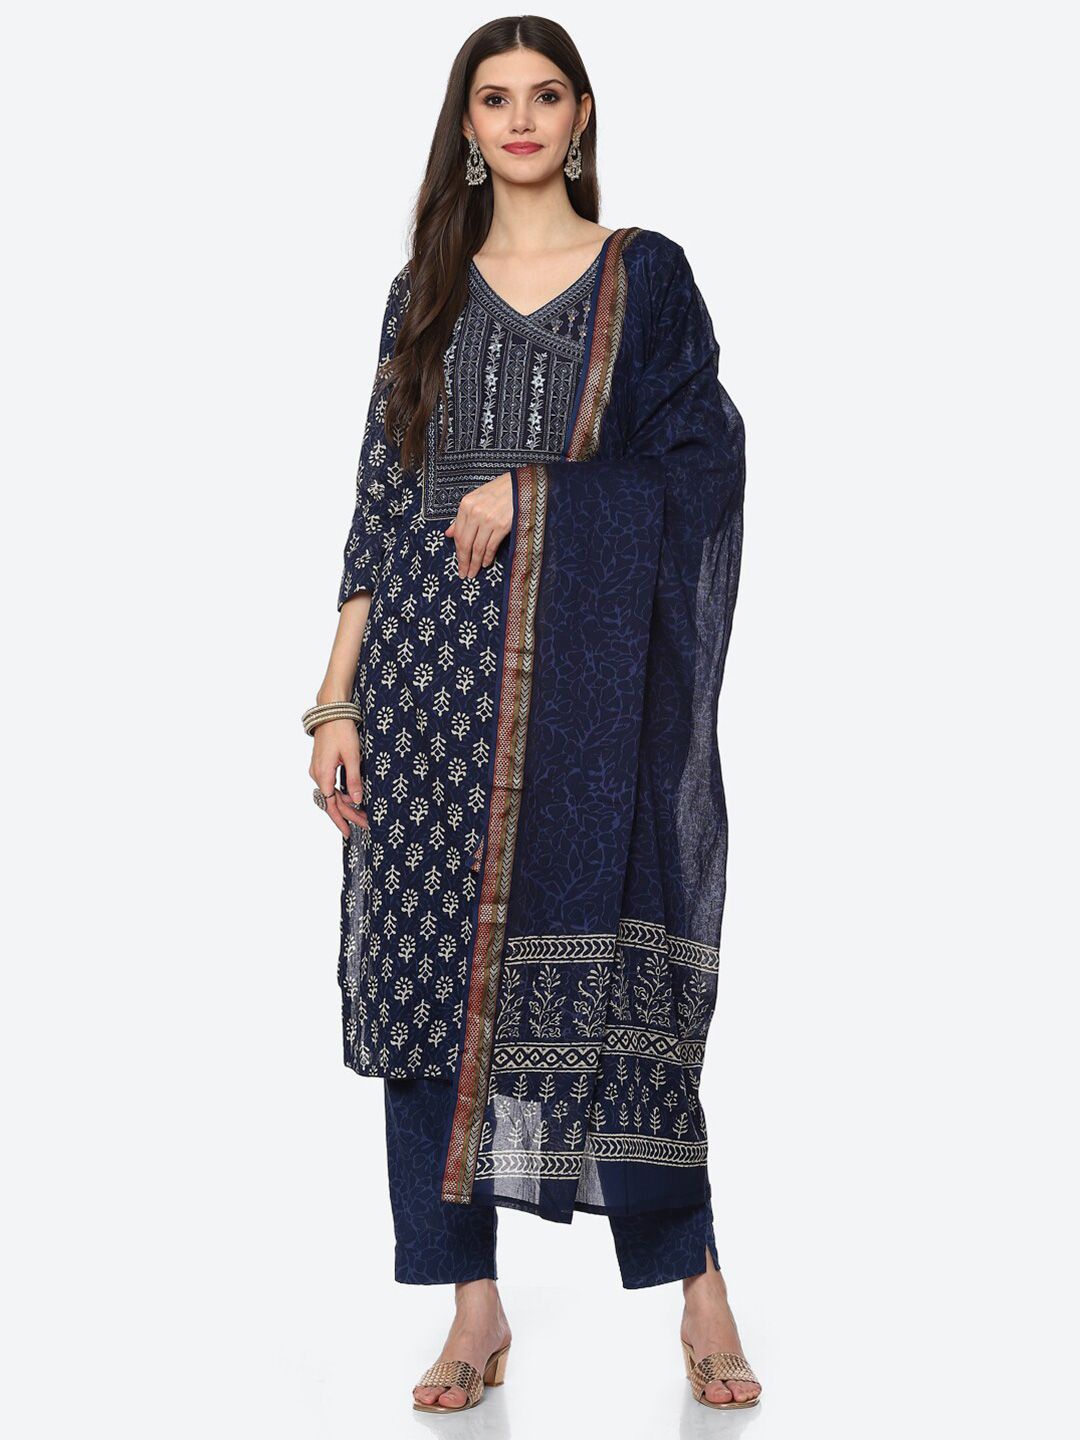 Biba Blue & Beige Printed Unstitched Dress Material Price in India